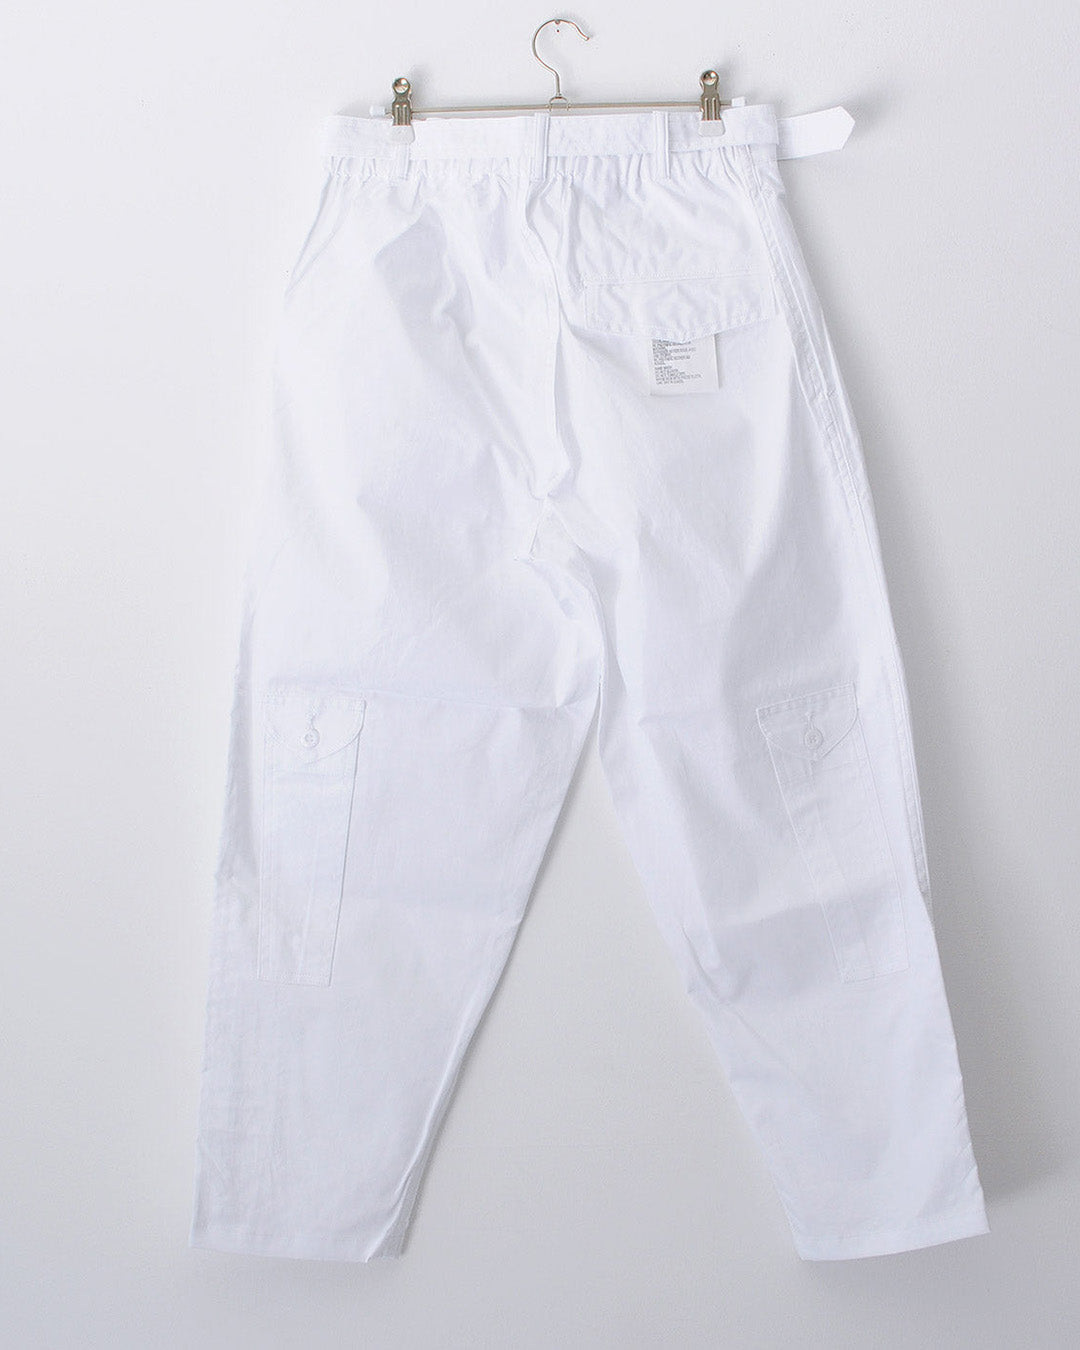 TUKI pilot pants / white / oxford / size4